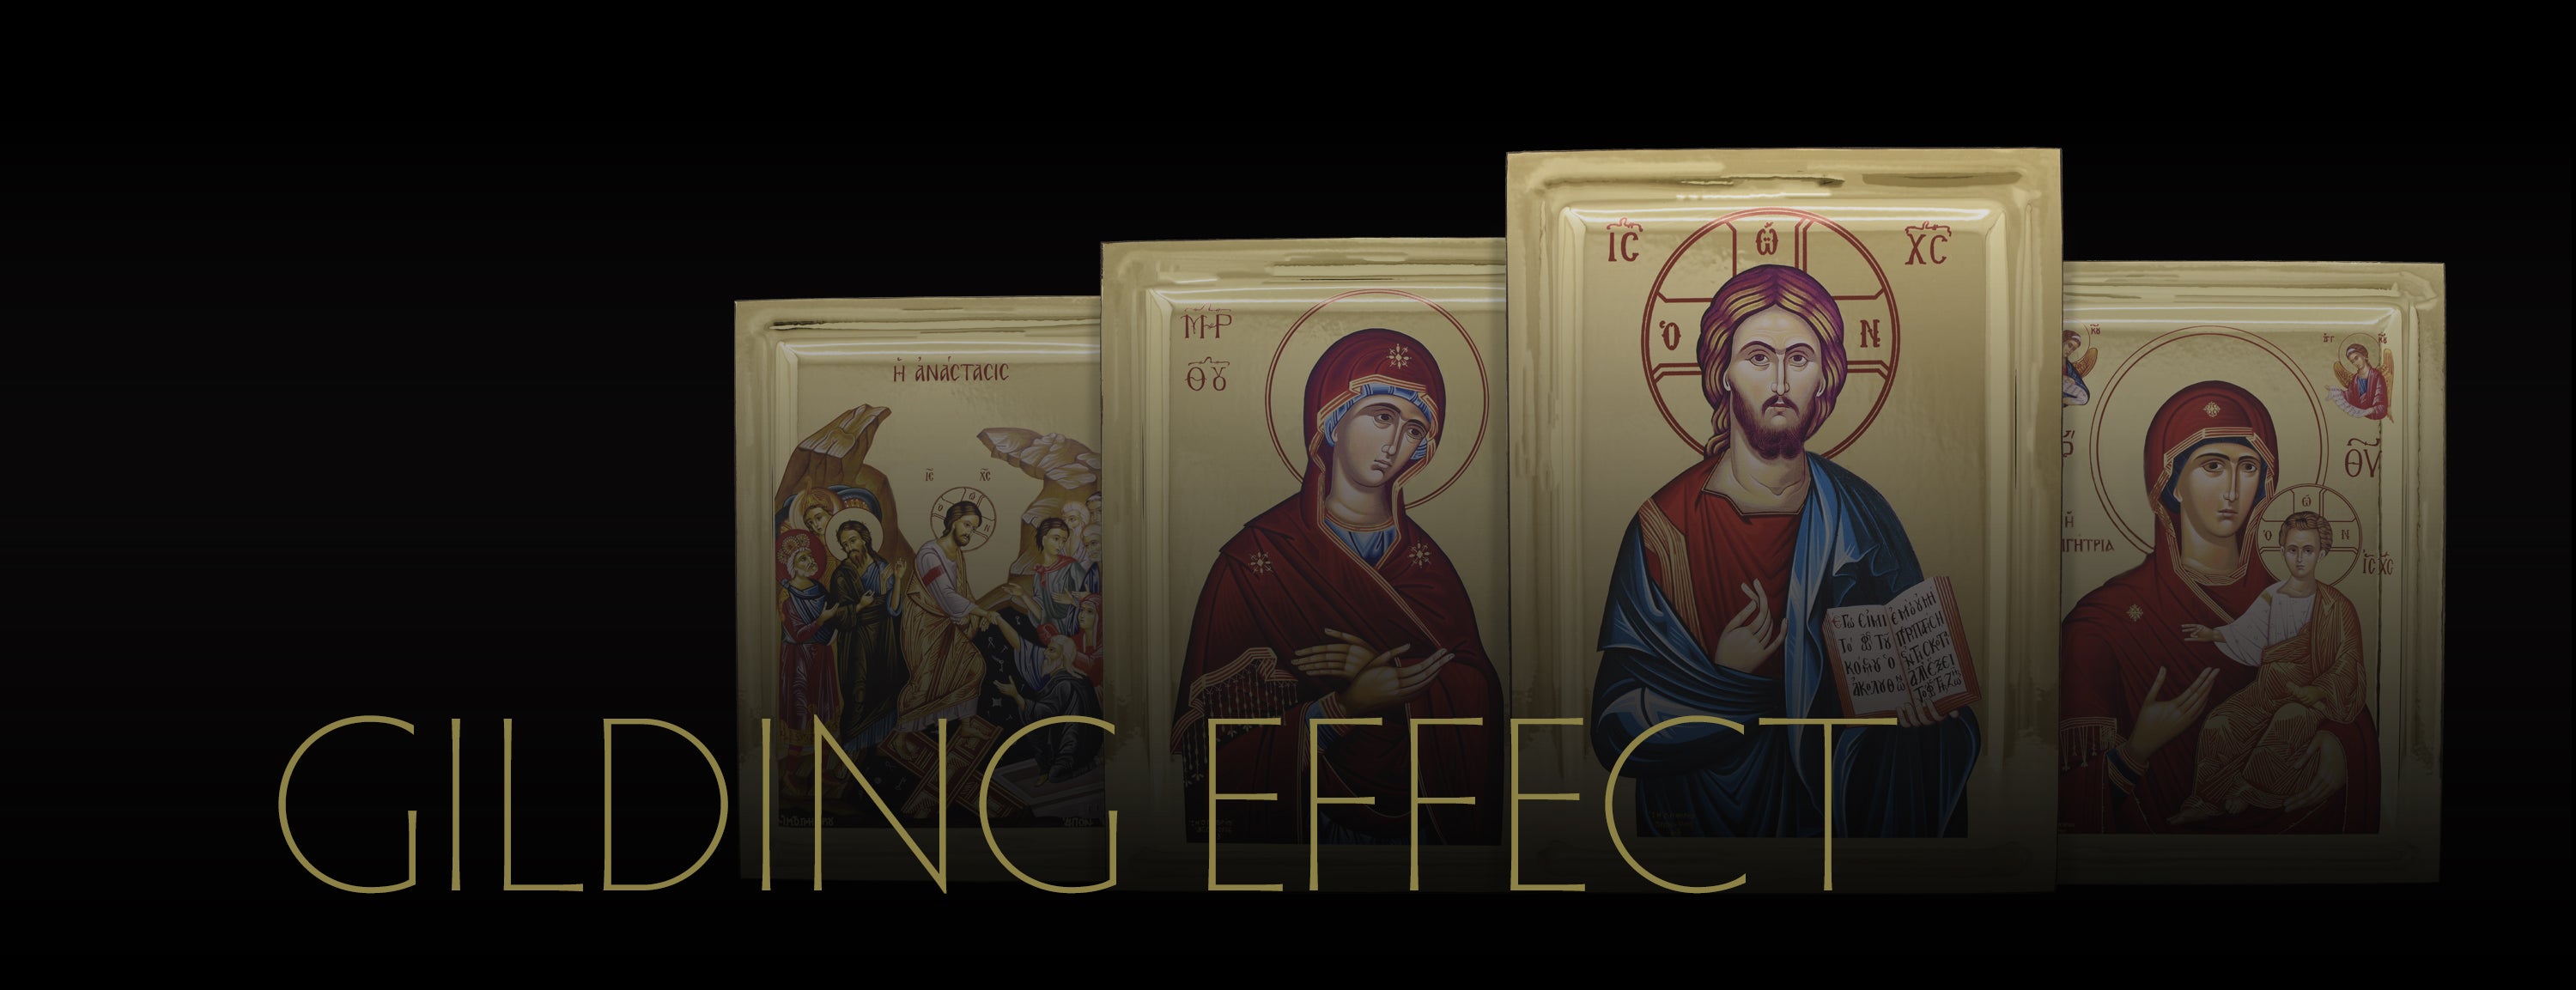 Online Shop Byzantine Greek Orthodox Icons